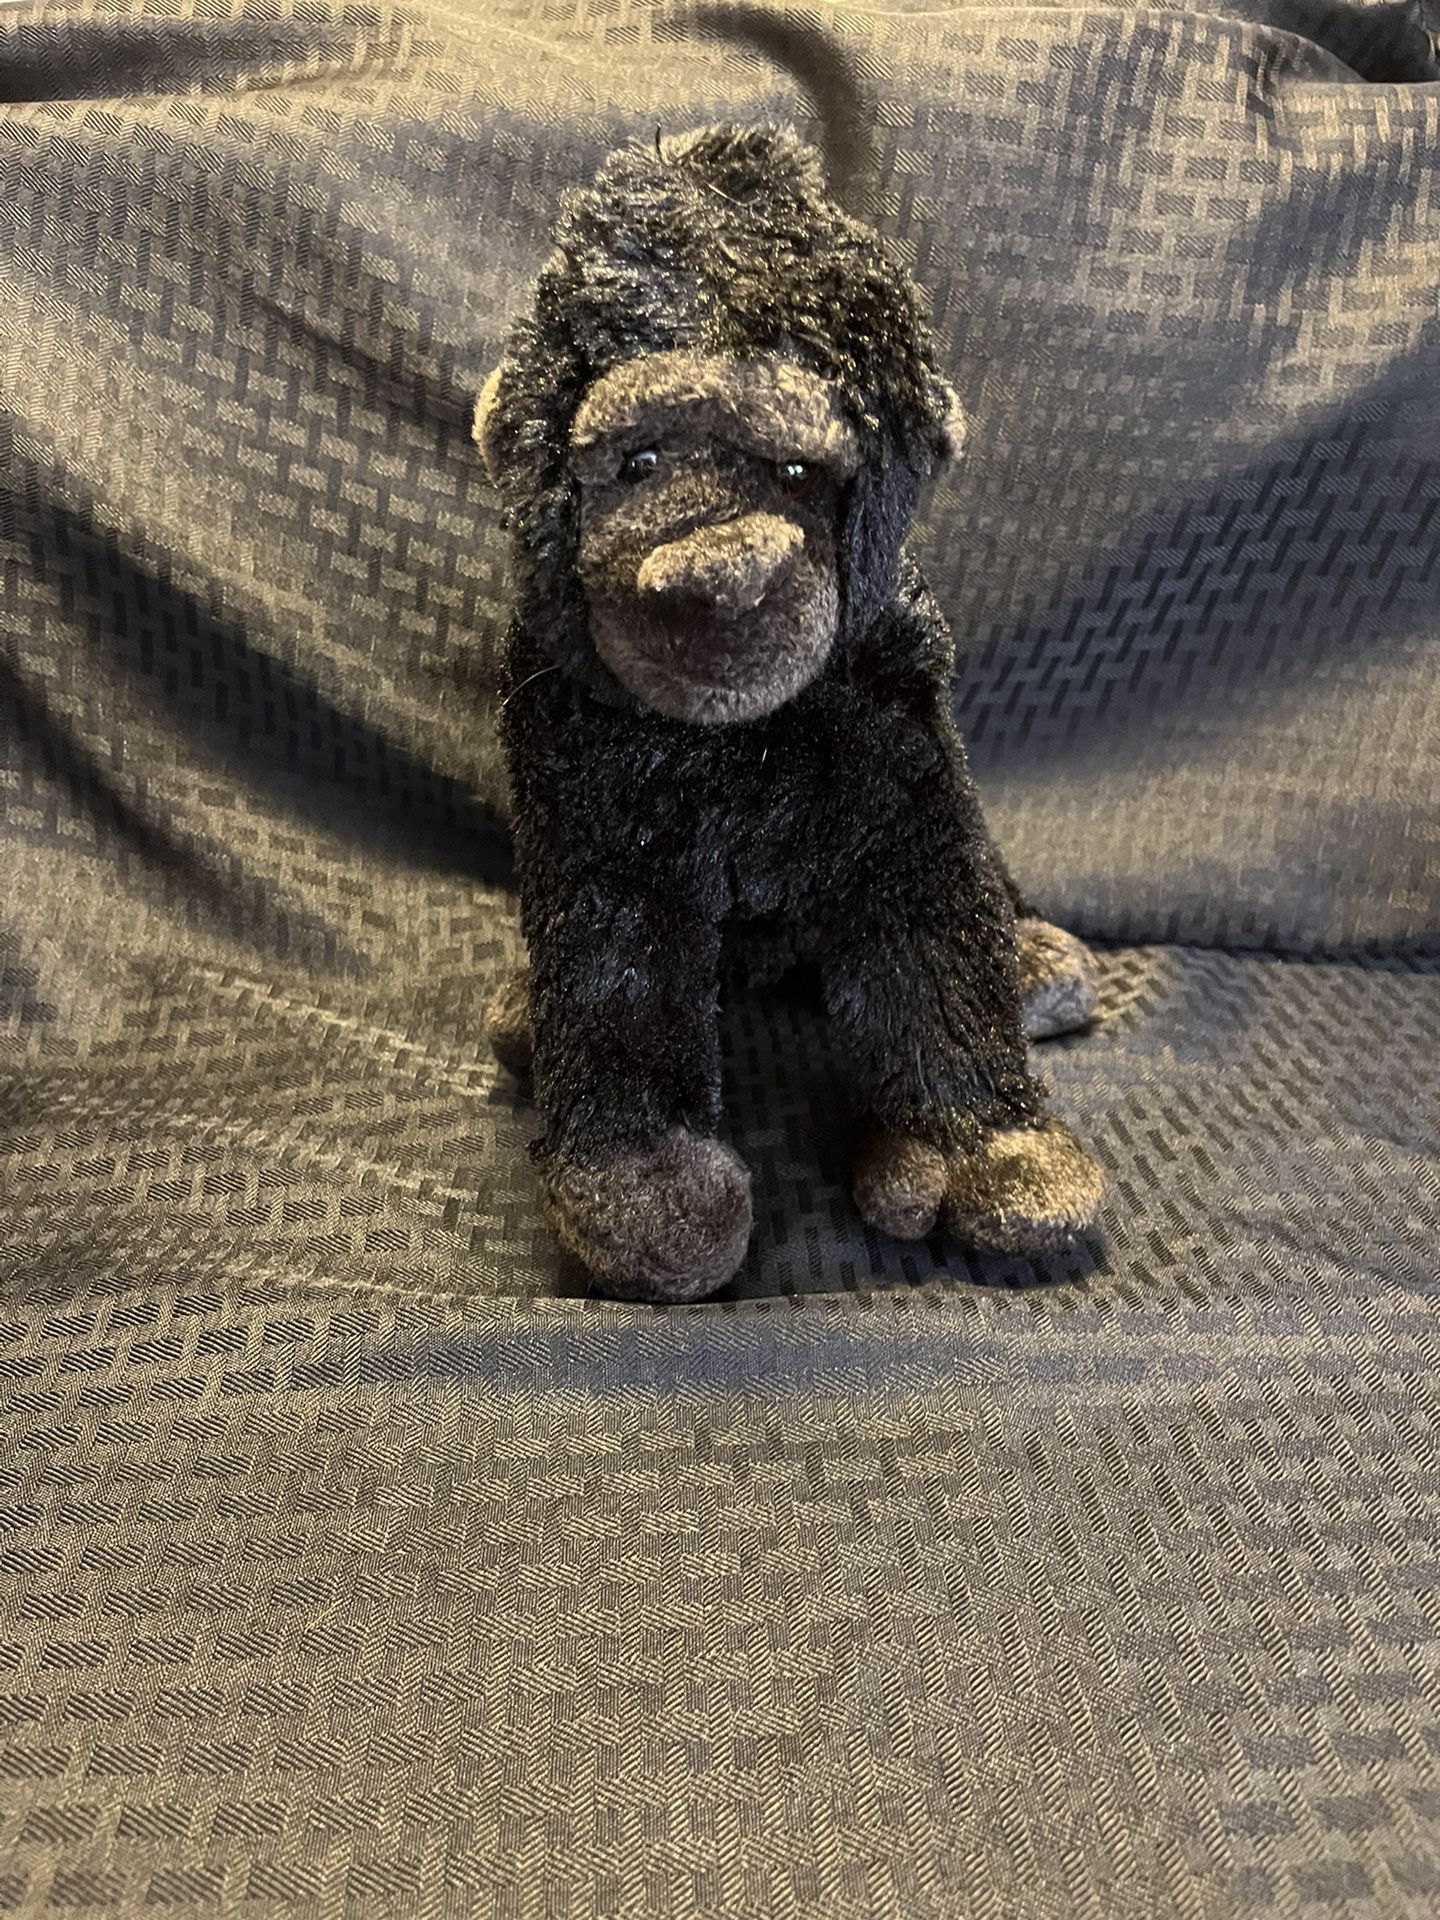 Aurora Plush Black Gorilla Ape Monkey Realistic Stuffed Animal Toy Bean Bag